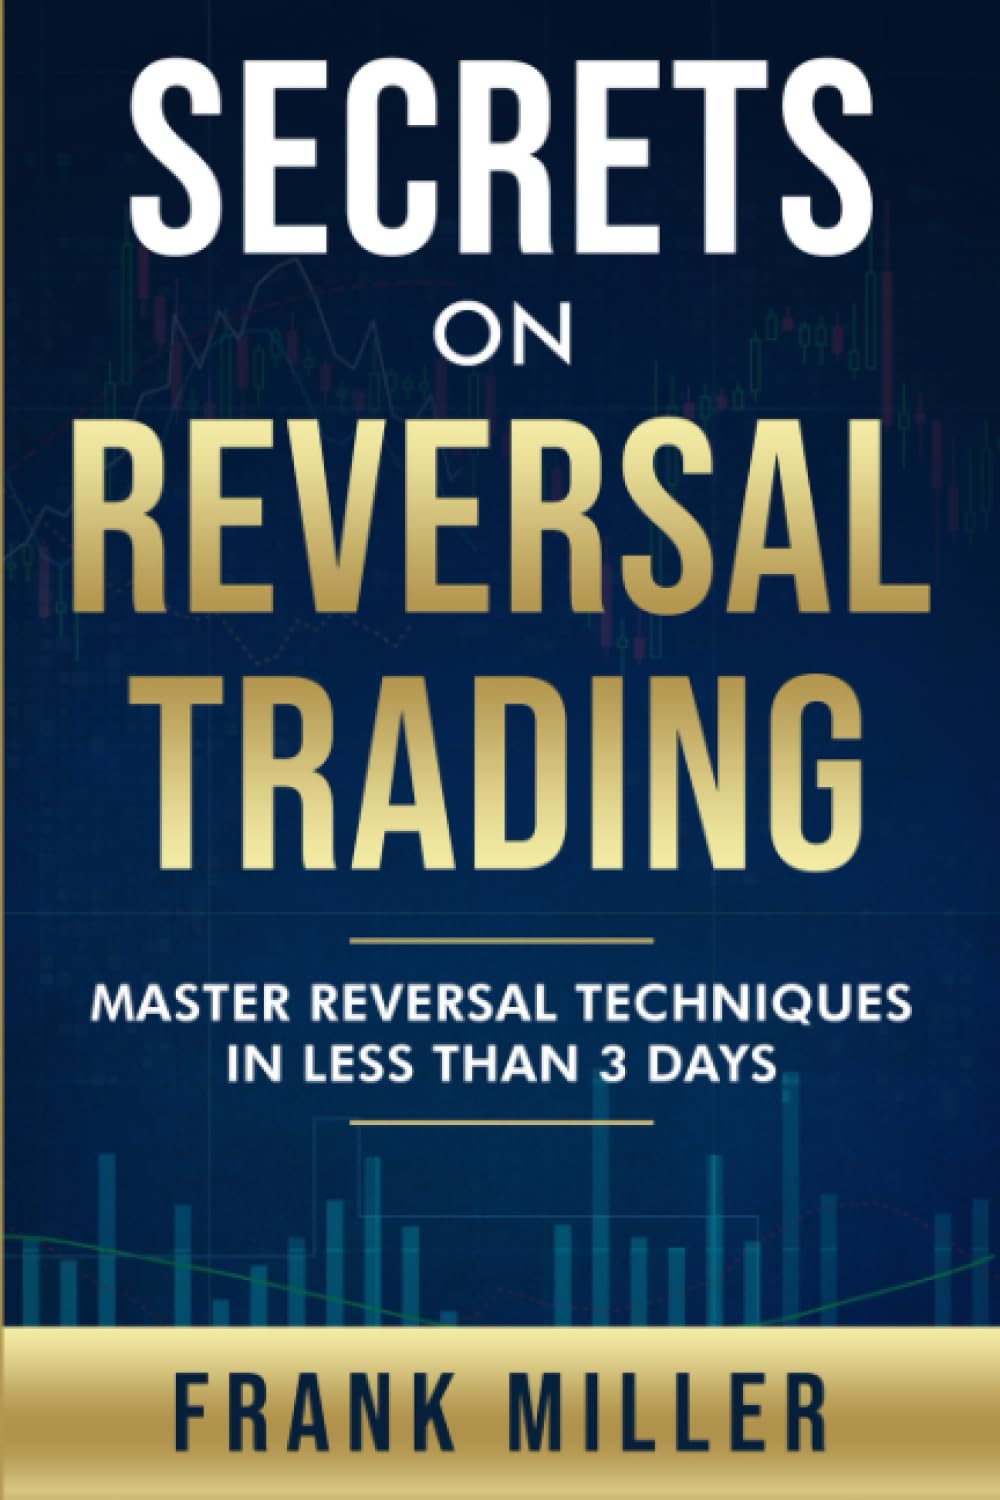 Secrets on Reversal Trading: Master Reversal Techniques in Less Than 3 Days by Frank Miller